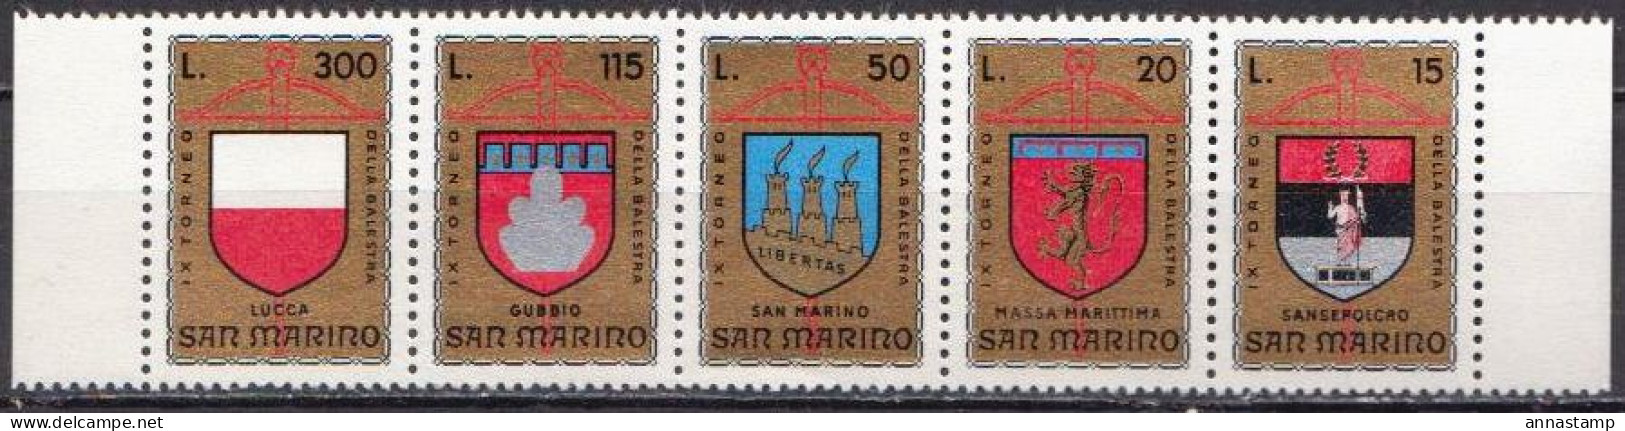 San Marino MNH Set - Francobolli